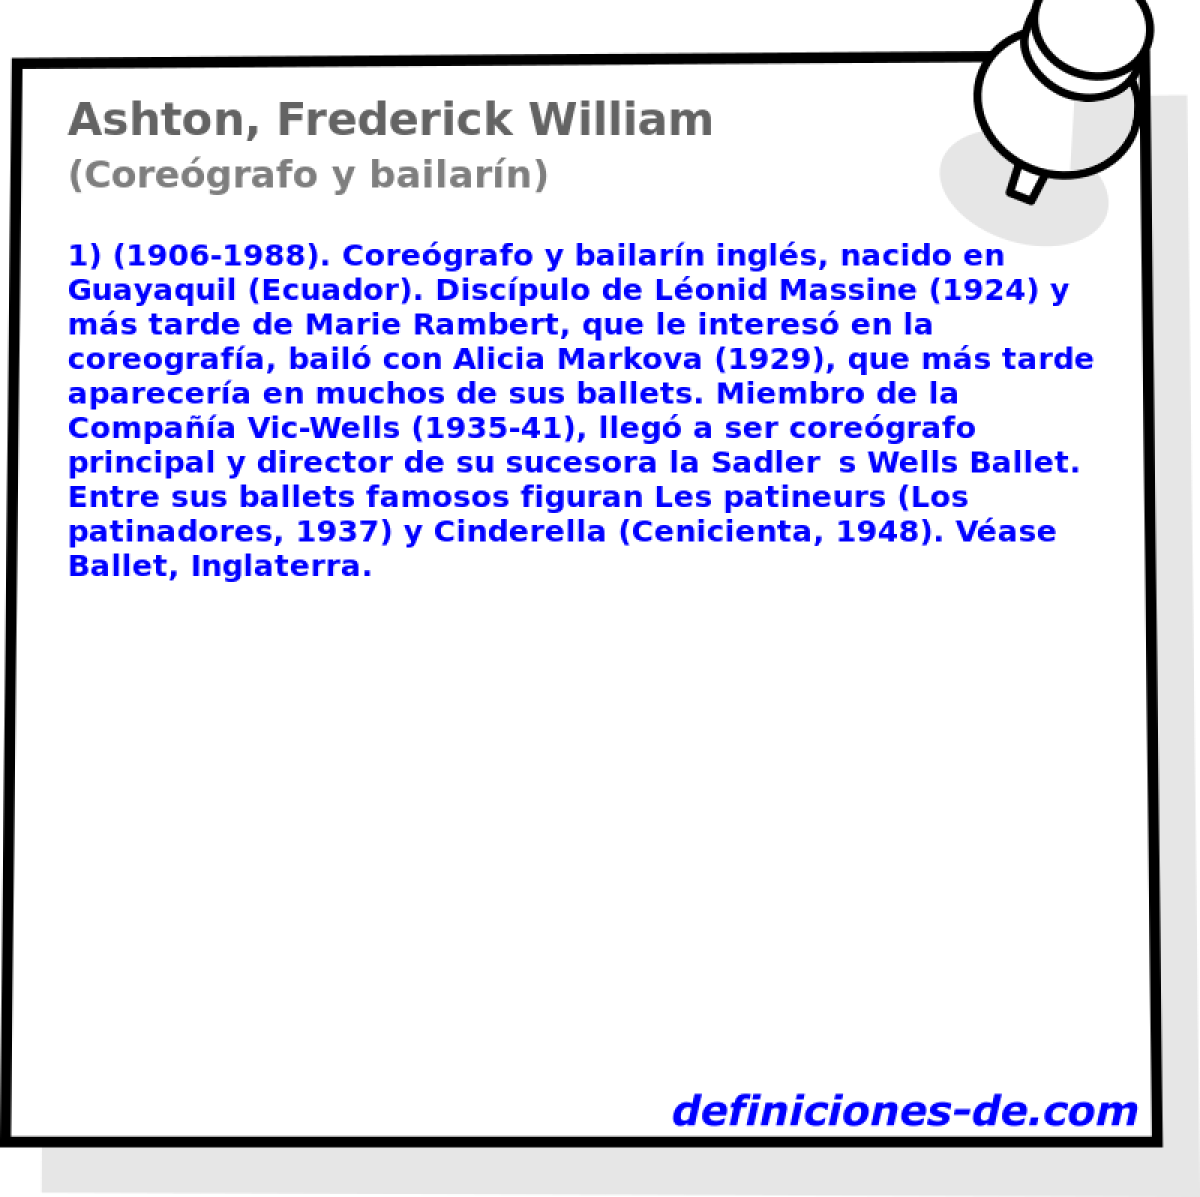 Ashton, Frederick William (Coregrafo y bailarn)